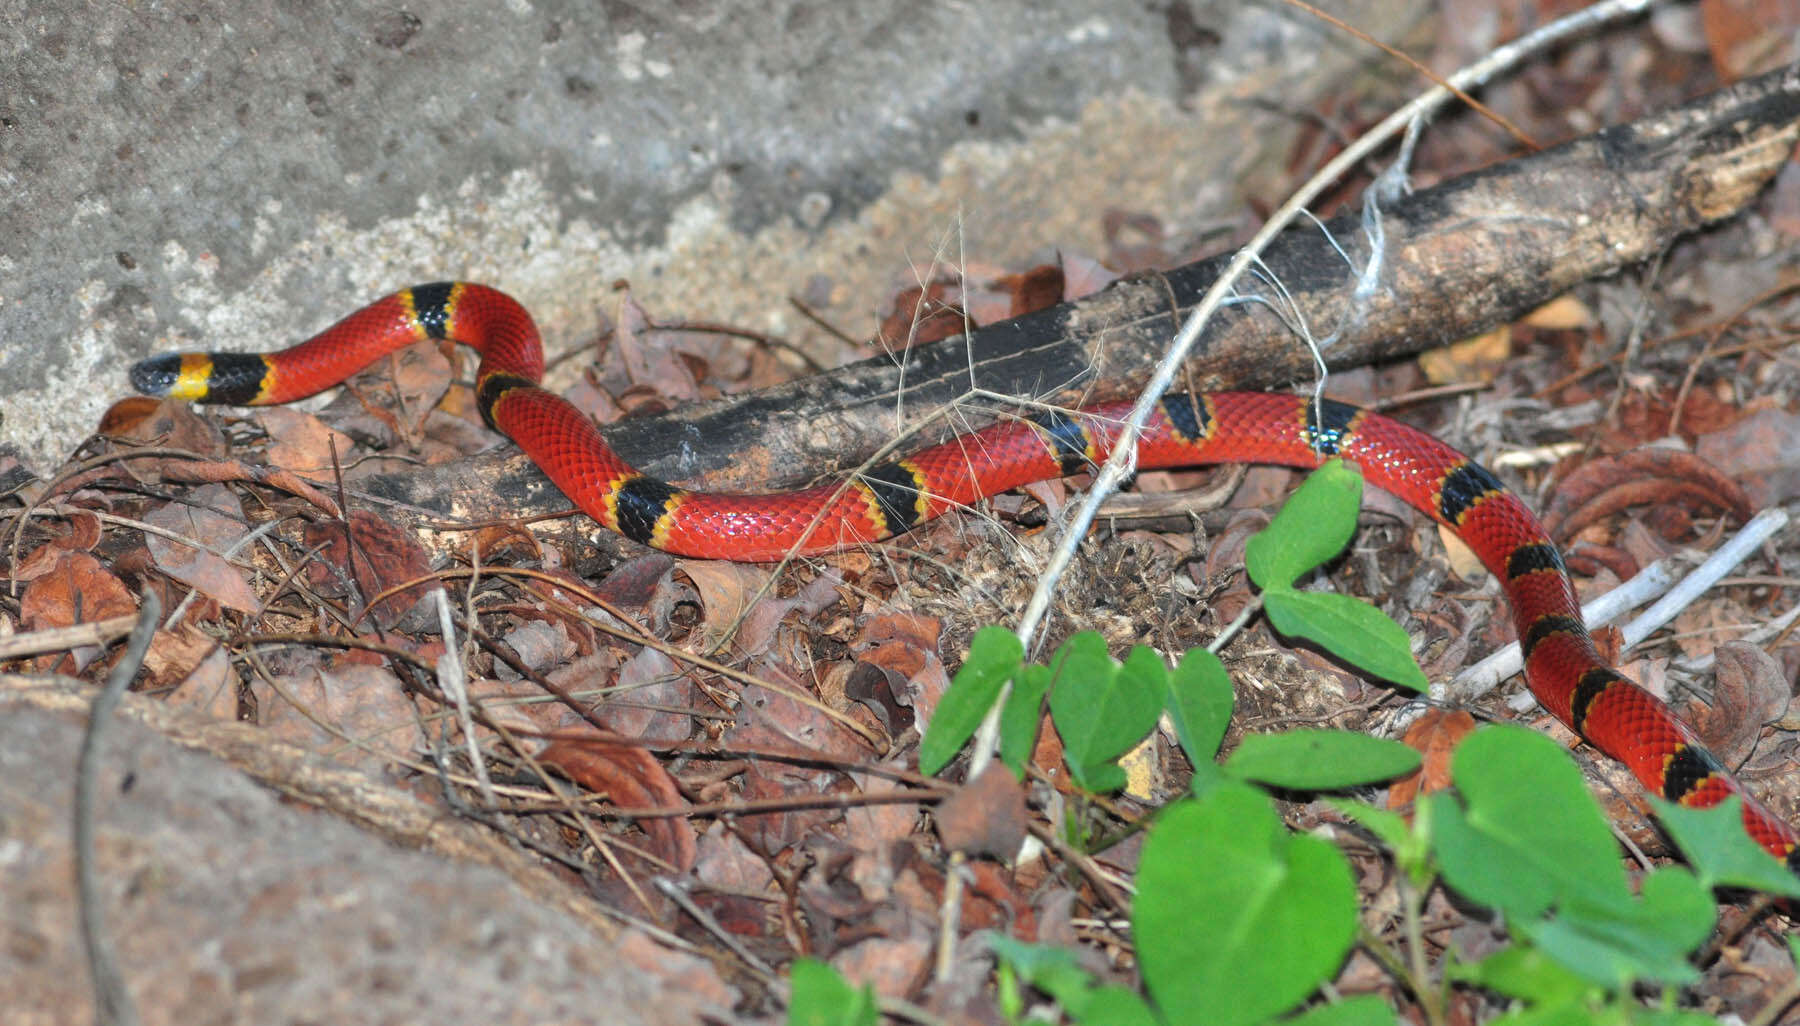 Image of Nayarit Coral Snake